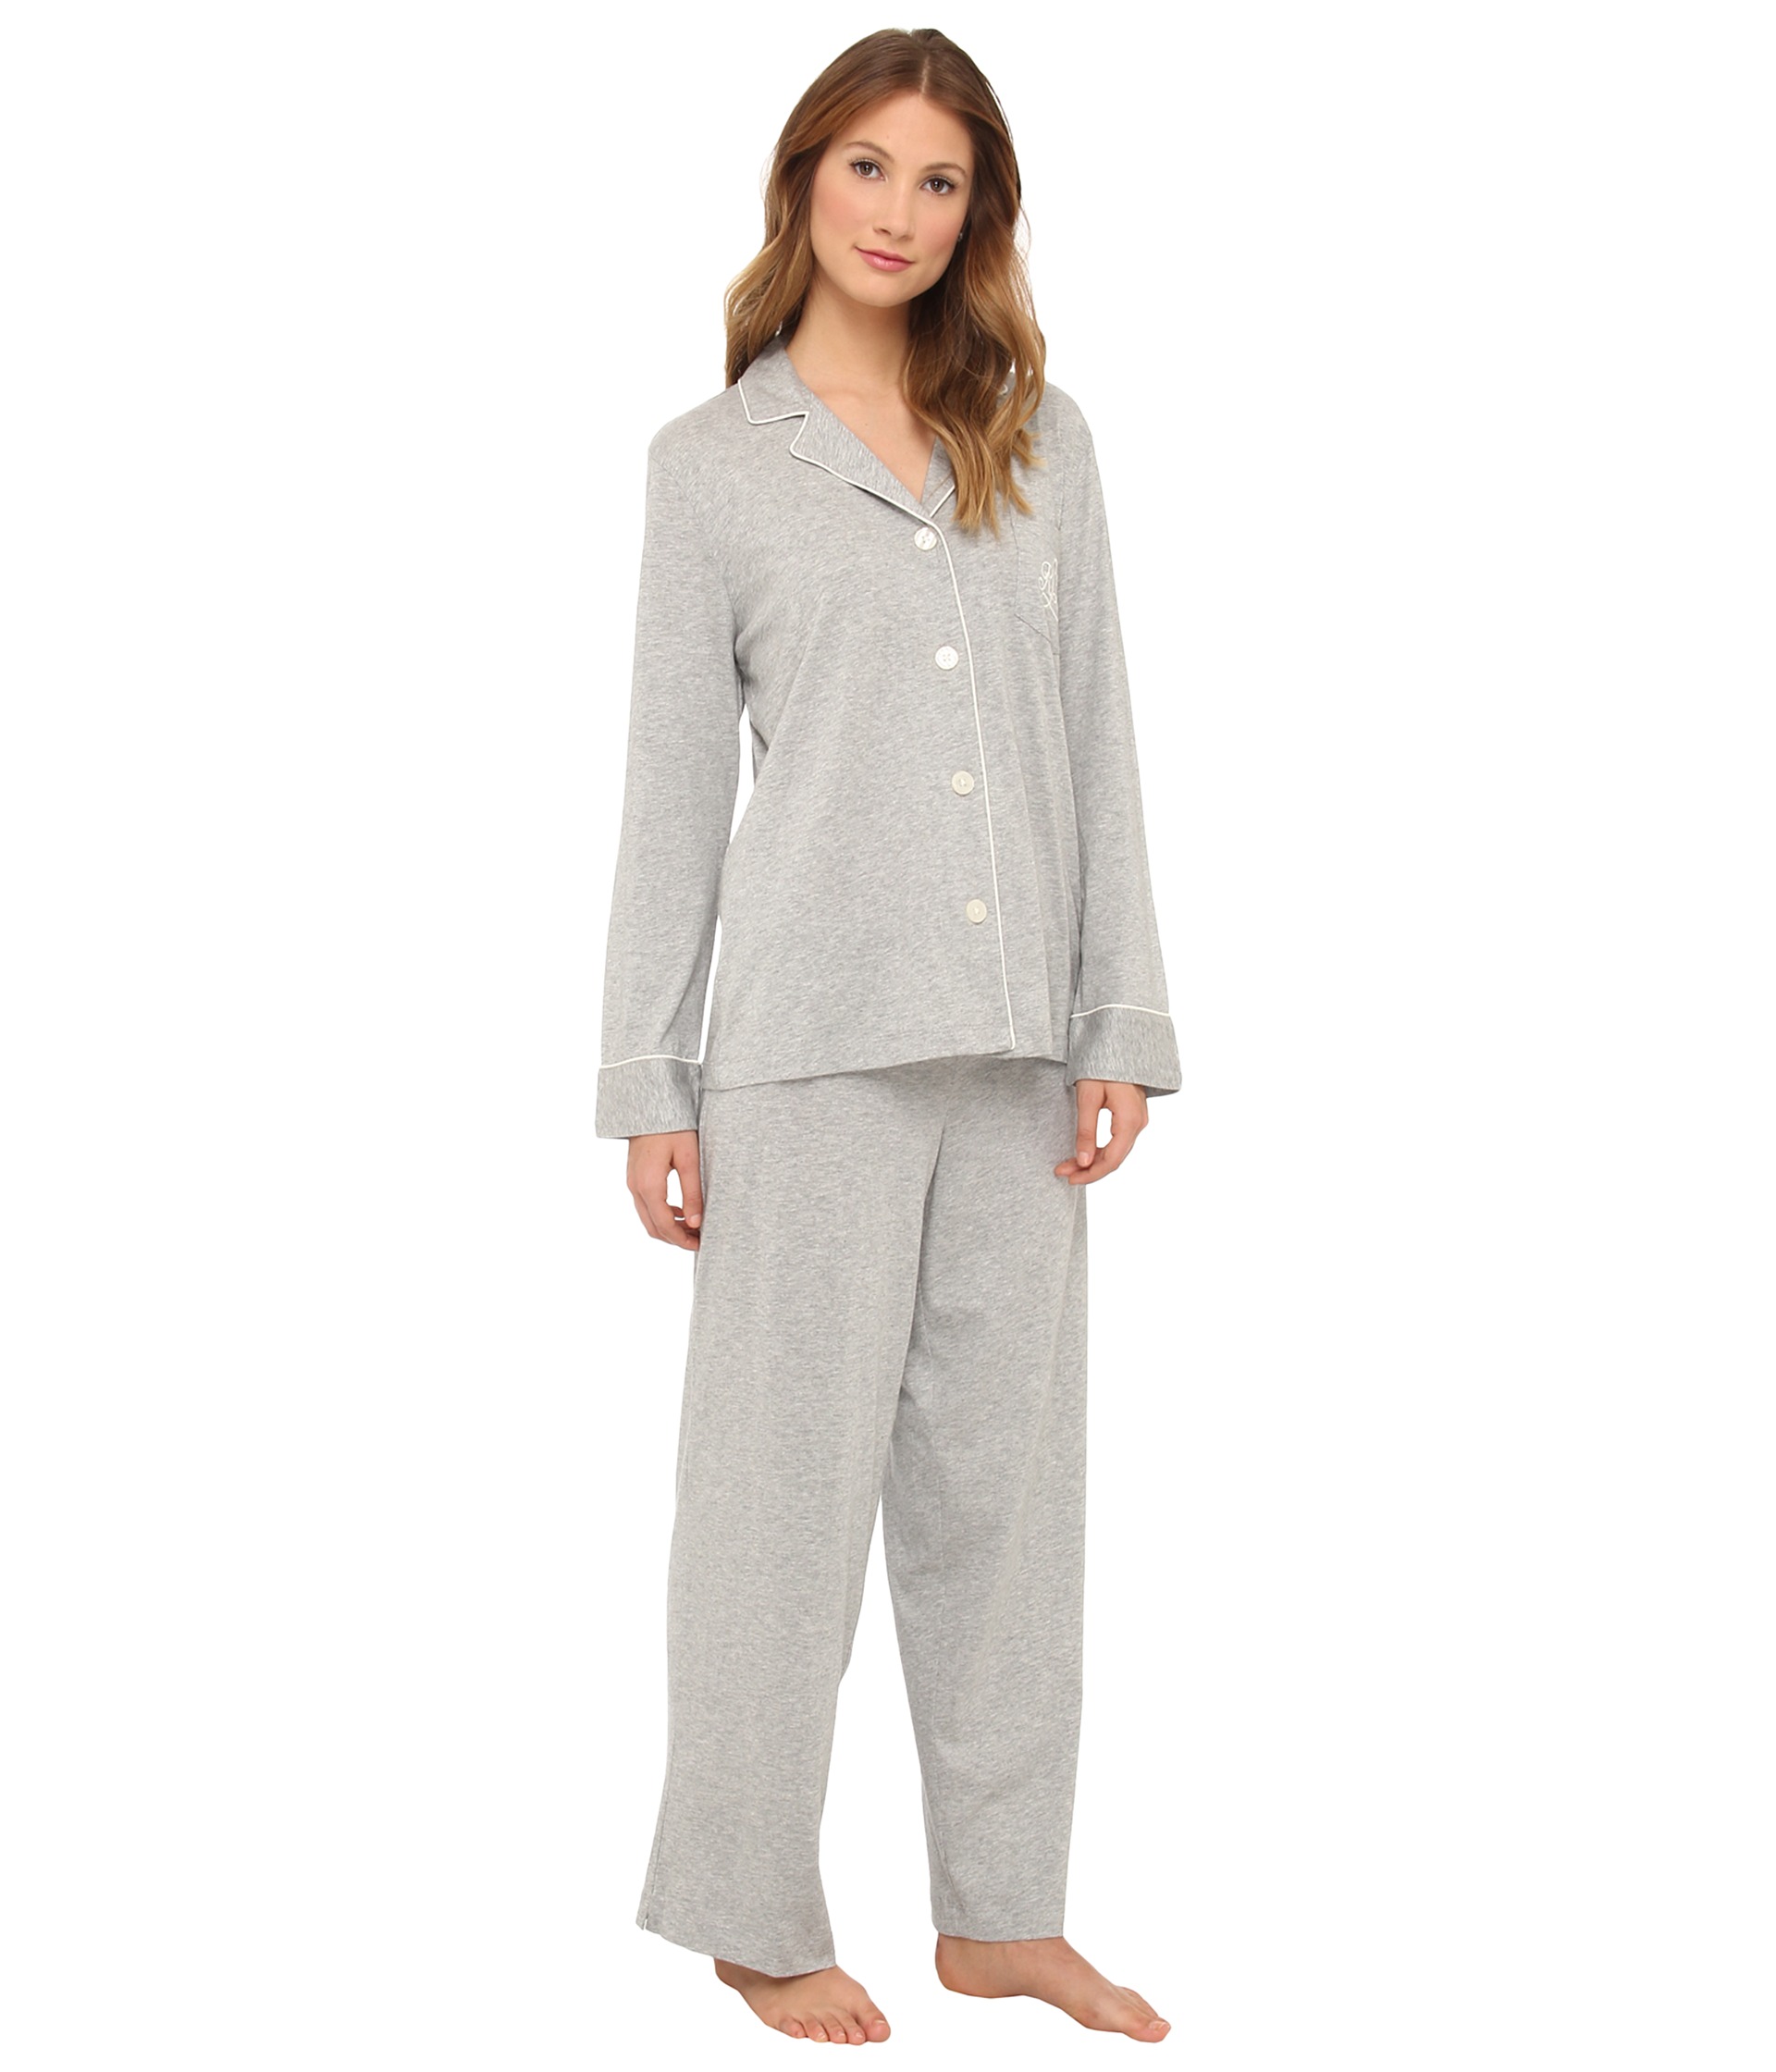 LAUREN Ralph Lauren Hammond Knits Pajama Set at Zappos.com